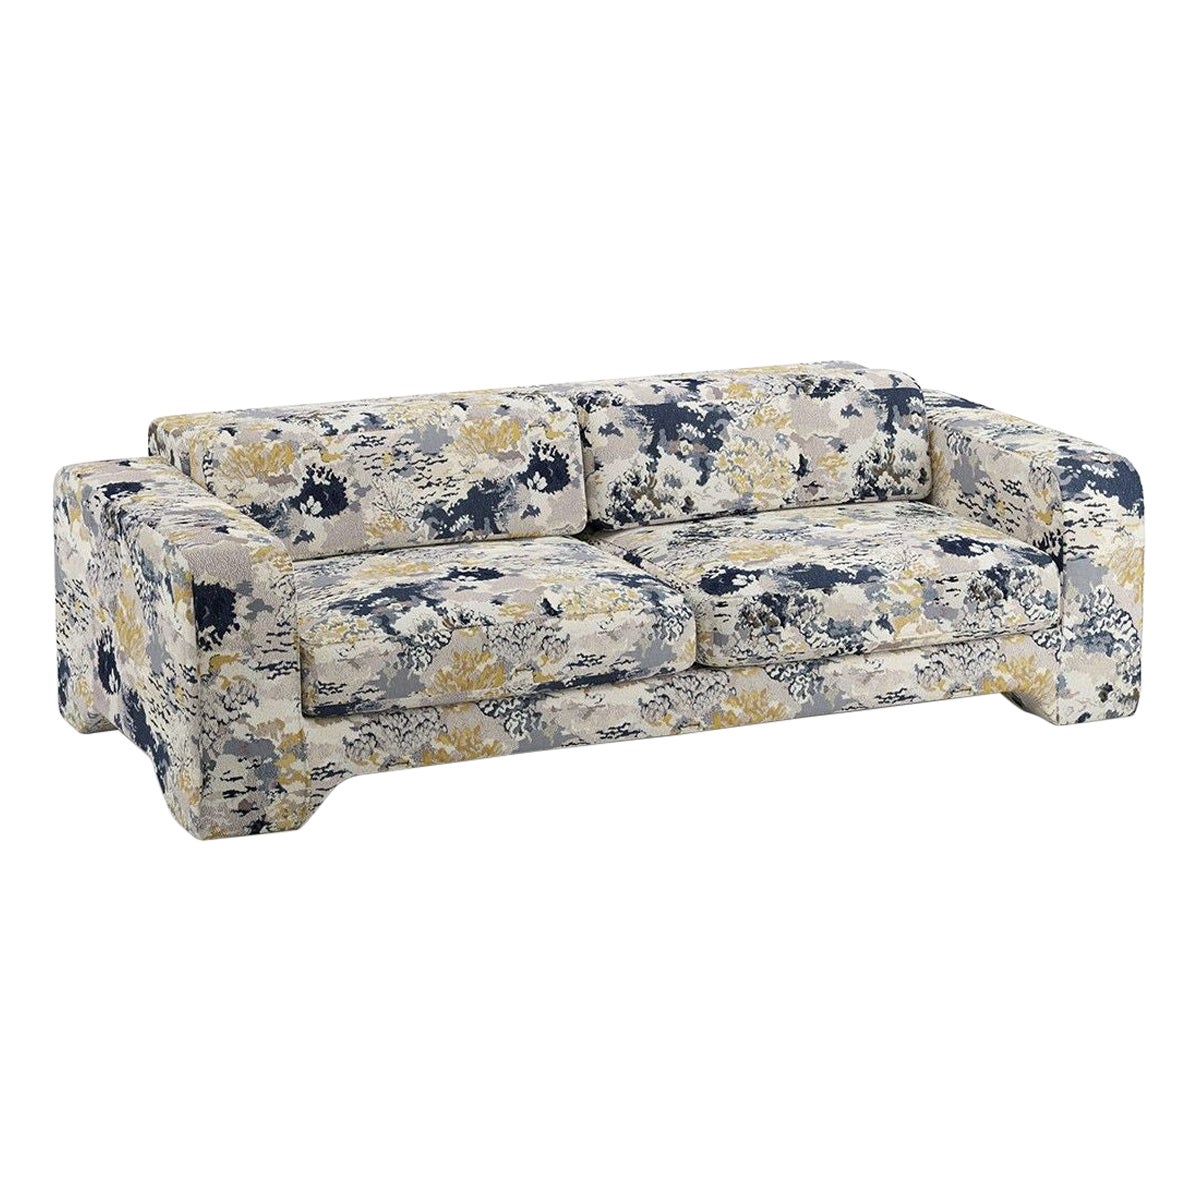 Popus Editions Giovanna 4 Seater Sofa in Indigo Marrakech Jacquard Fabric For Sale